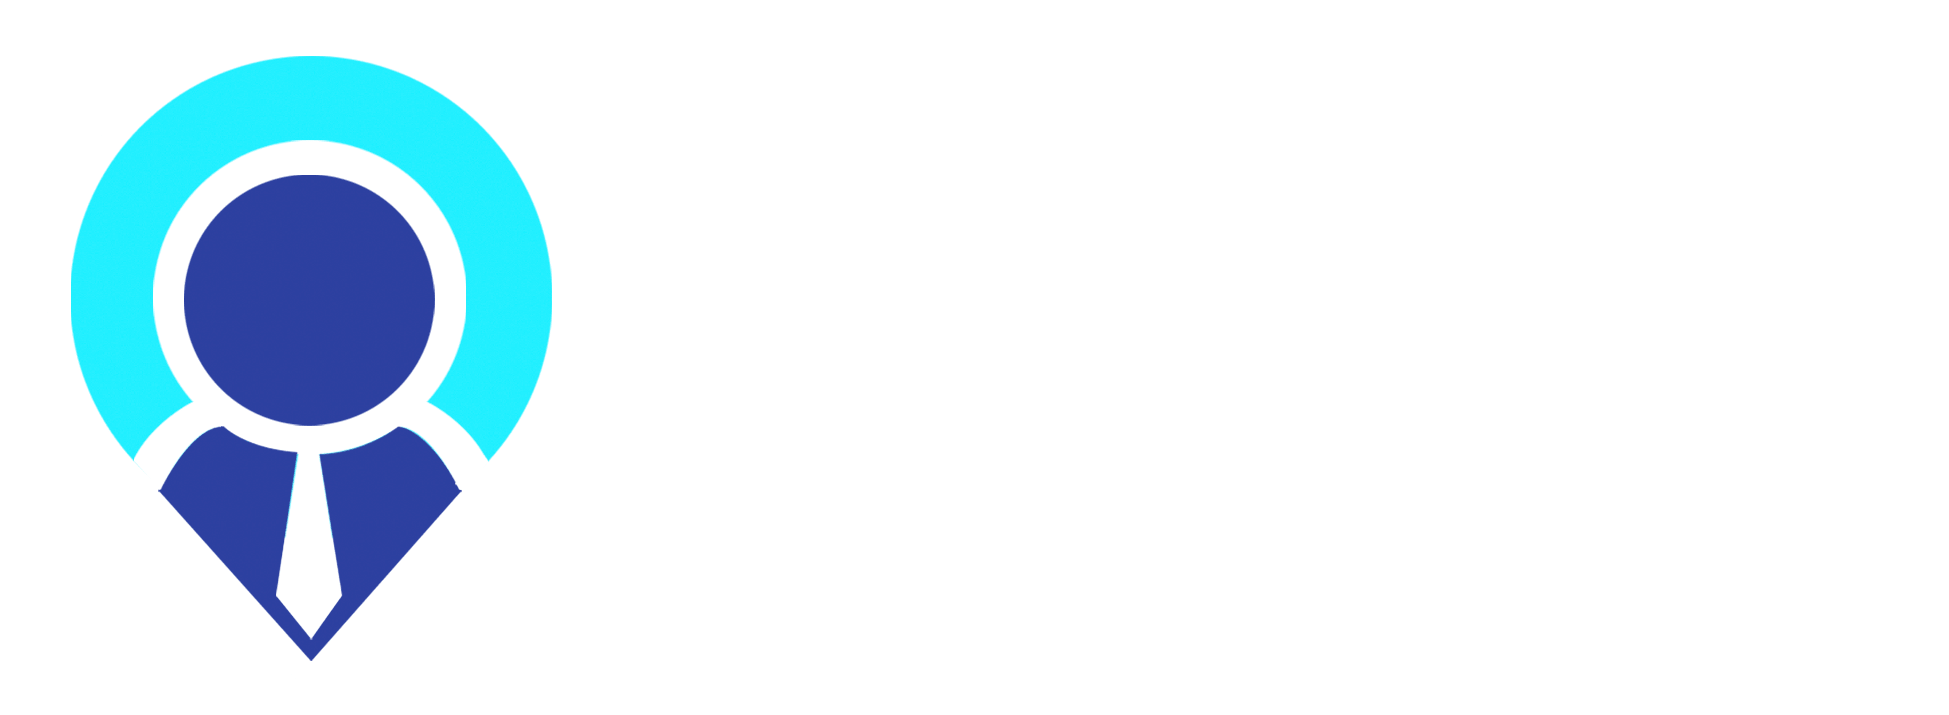 Imprint-logo